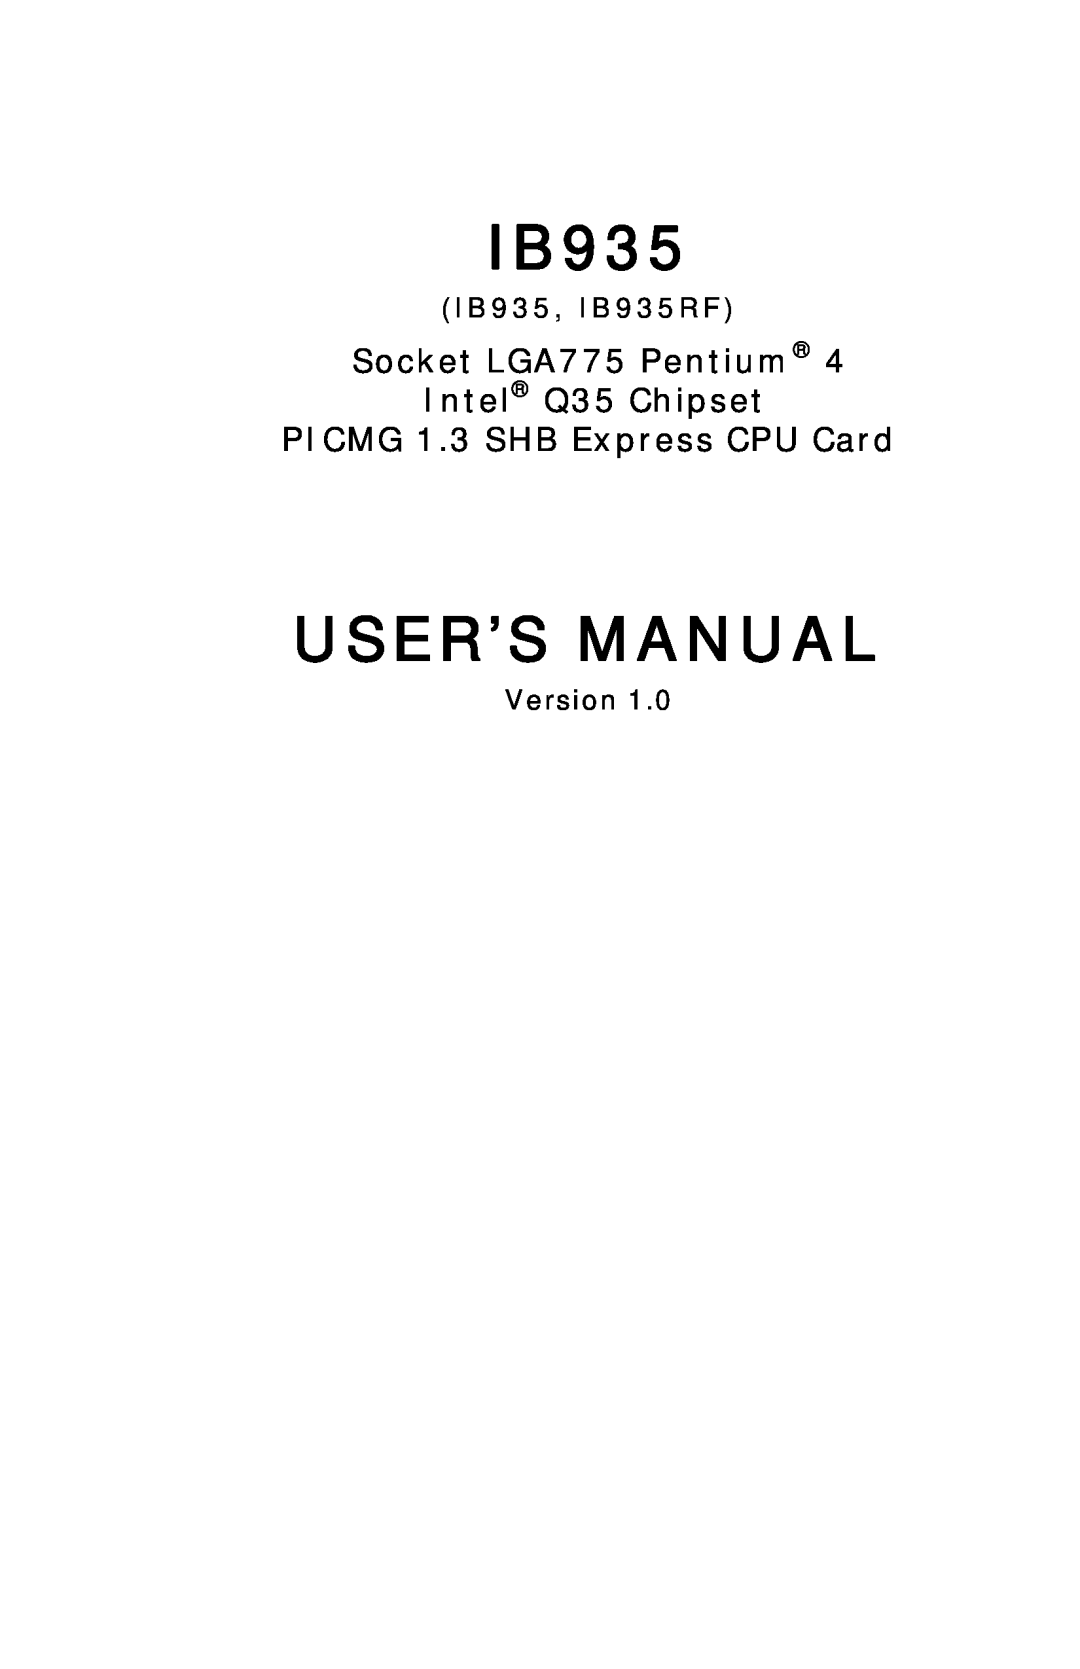 Intel user manual IB935, IB935RF, Version, User’S Manual, Socket LGA775 Pentium Intel Q35 Chipset 